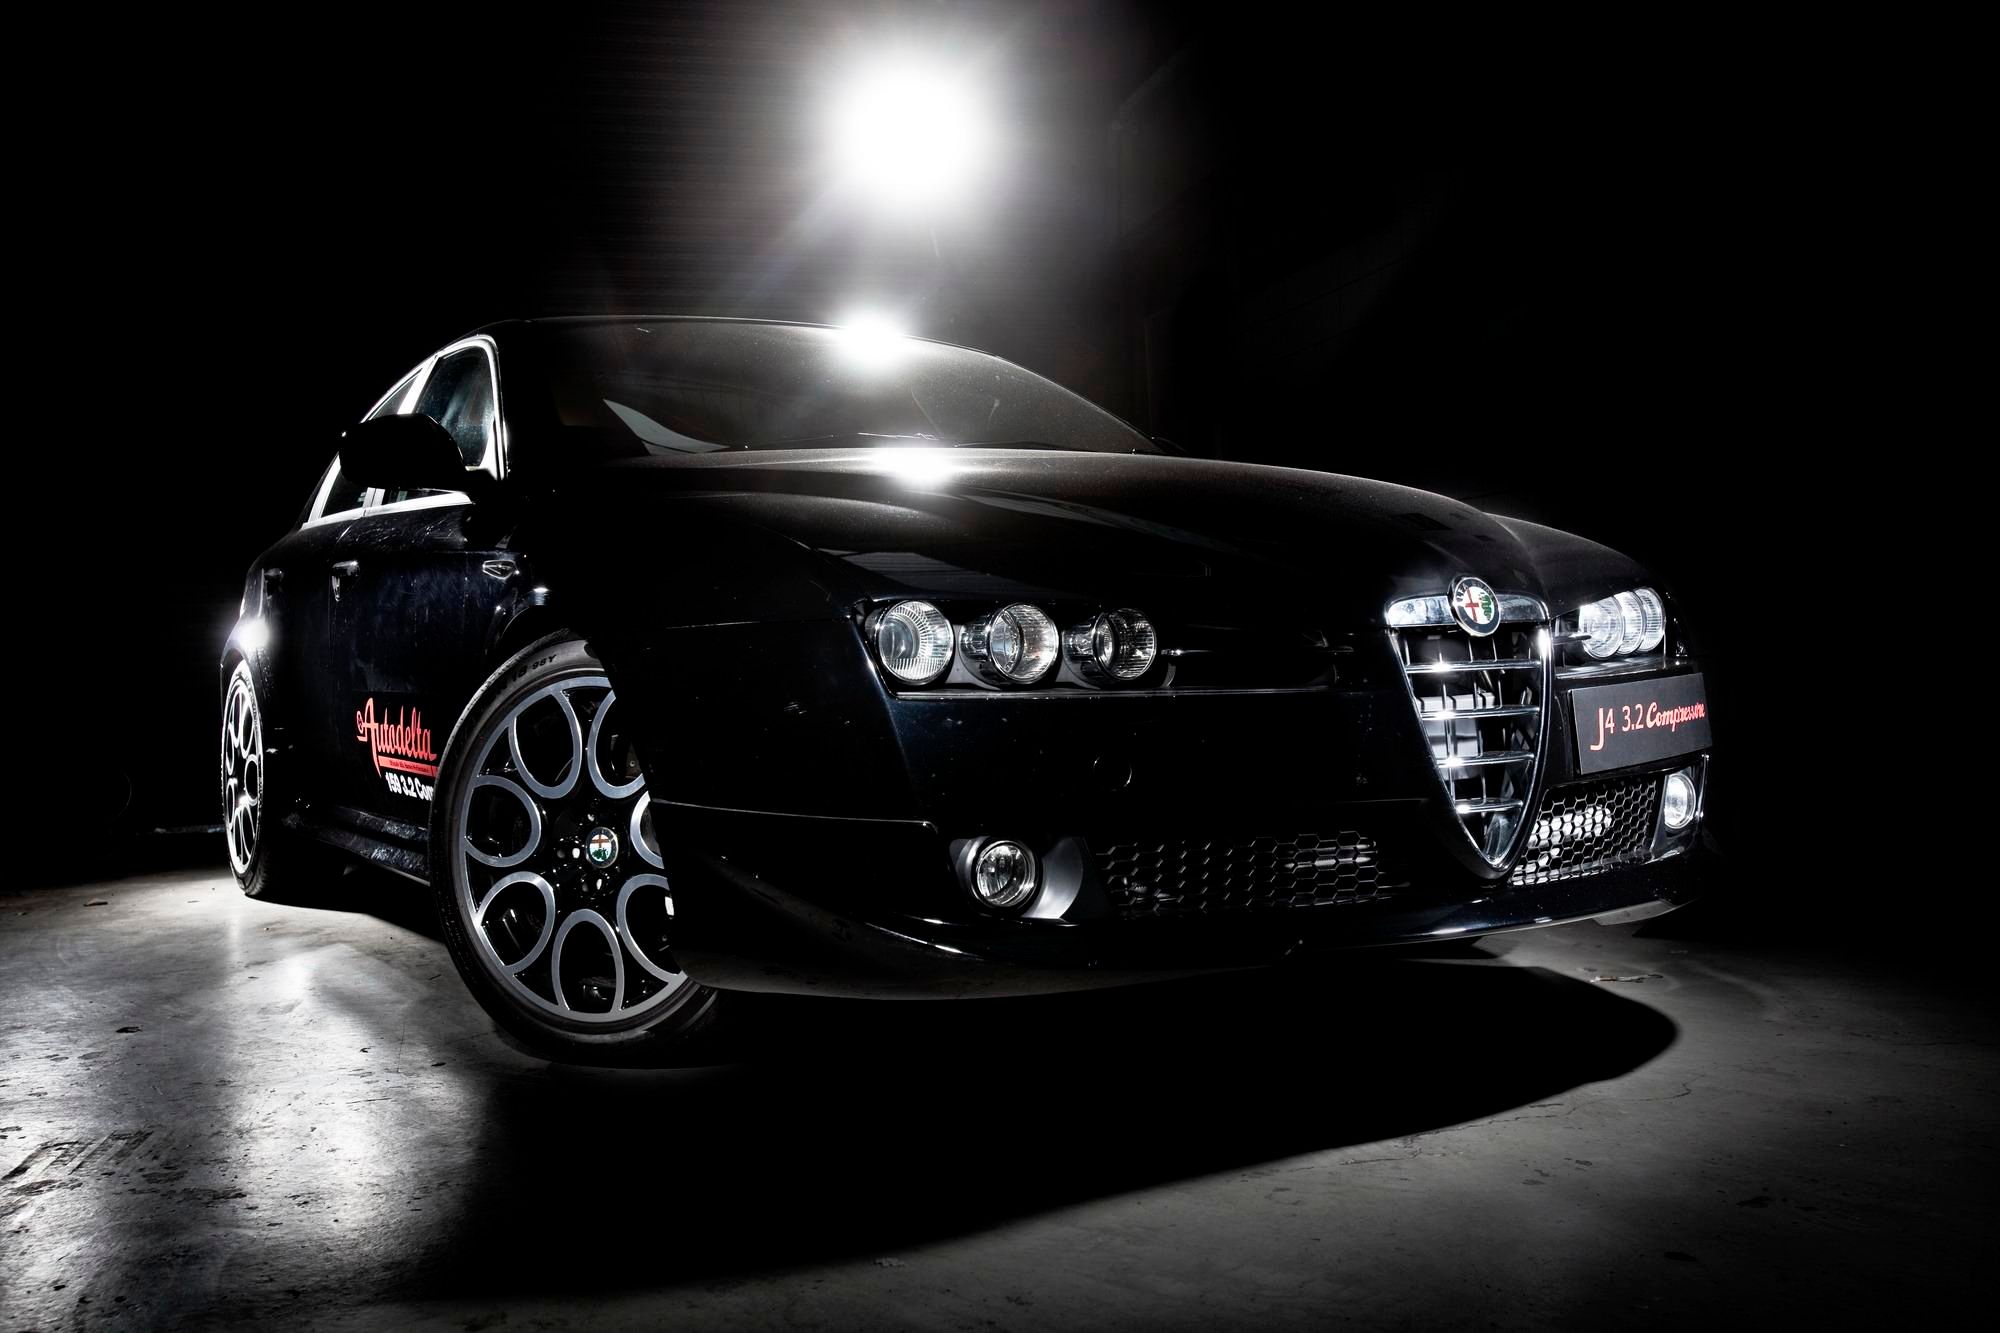 Beauty & Beast: Autodelta J4 2.2 C supercharged Alfa 159 - Autoblog